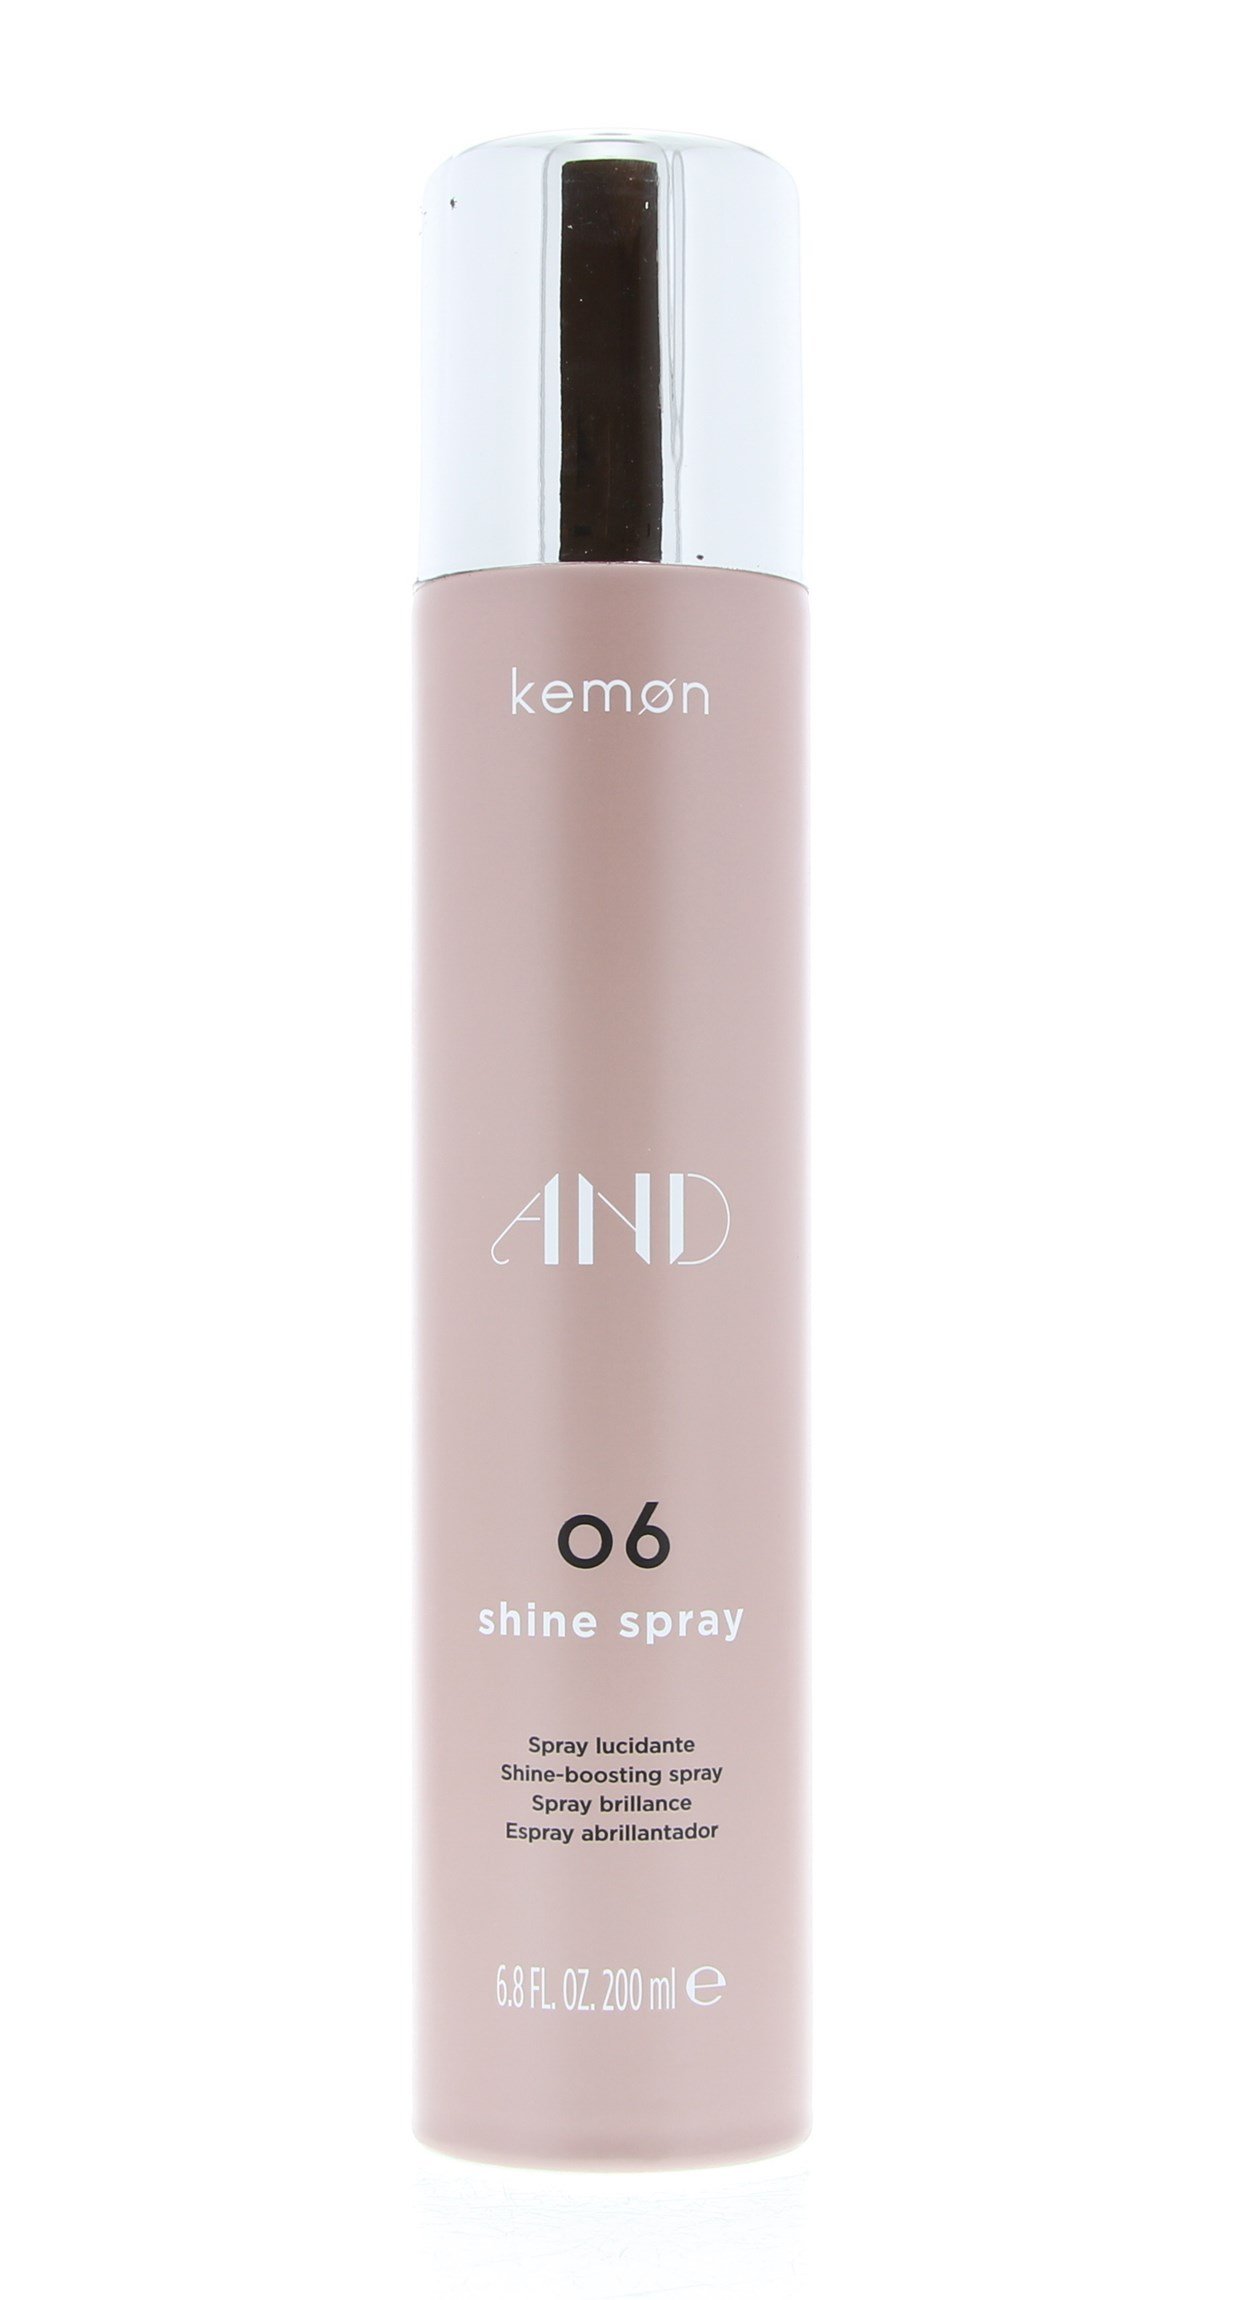 Kemon And 06 – Shine Spray pentru stralucire 200ml haircare.ro imagine